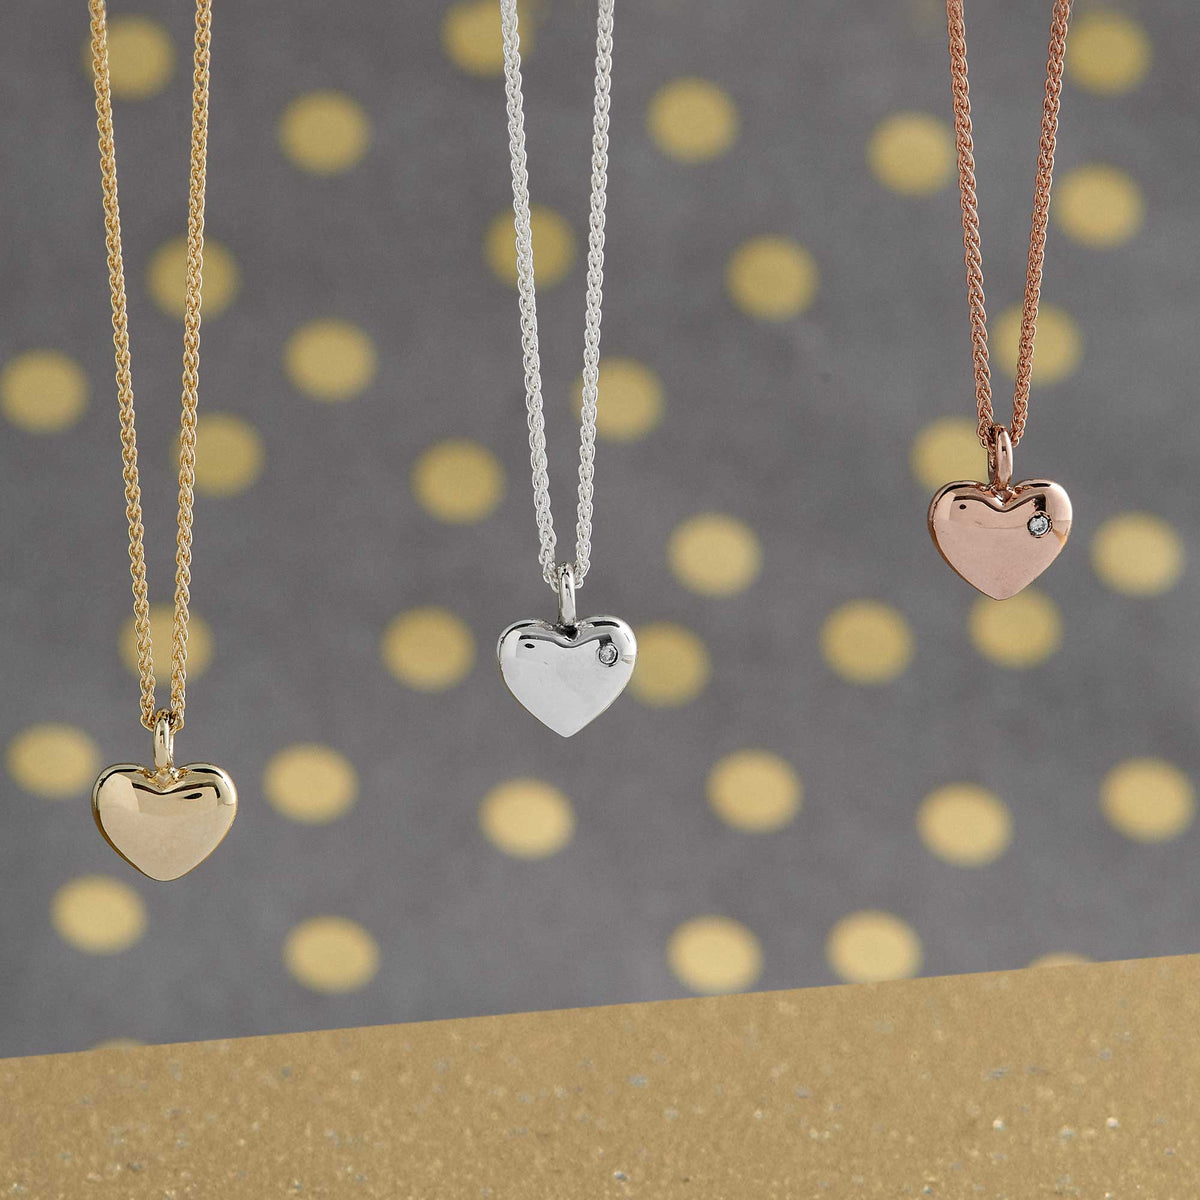 solid gold heart necklace with single diamond scarlett jewelery brighton uk